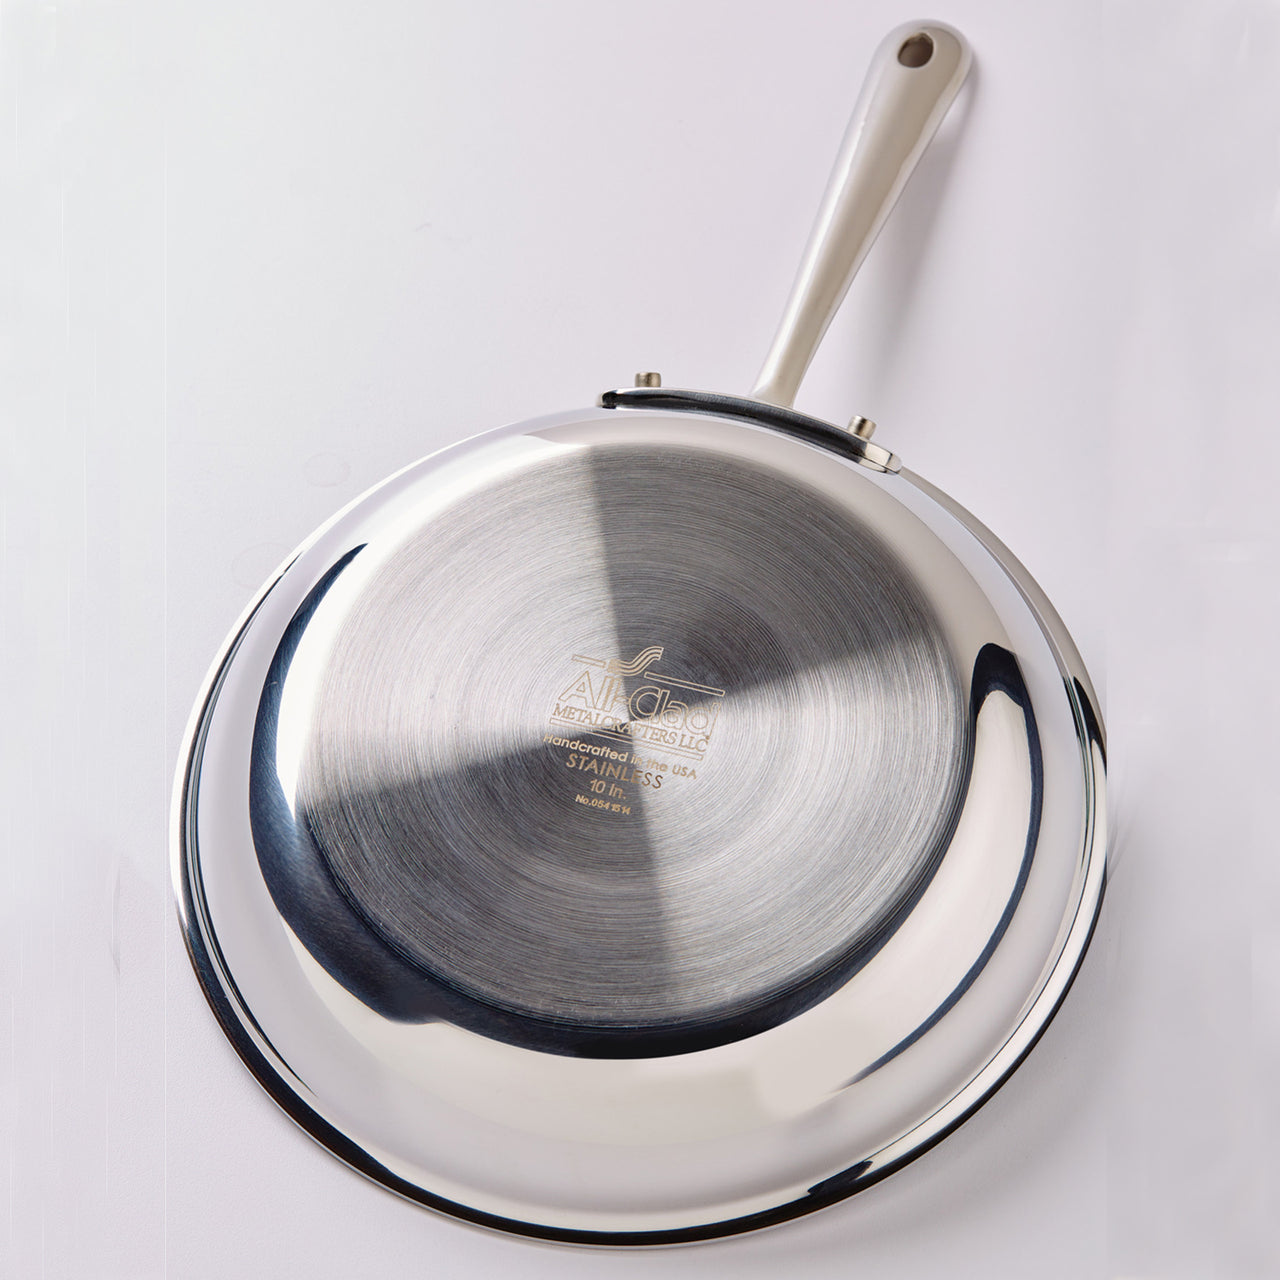 All-Clad D3 / TriPly Frying Pan